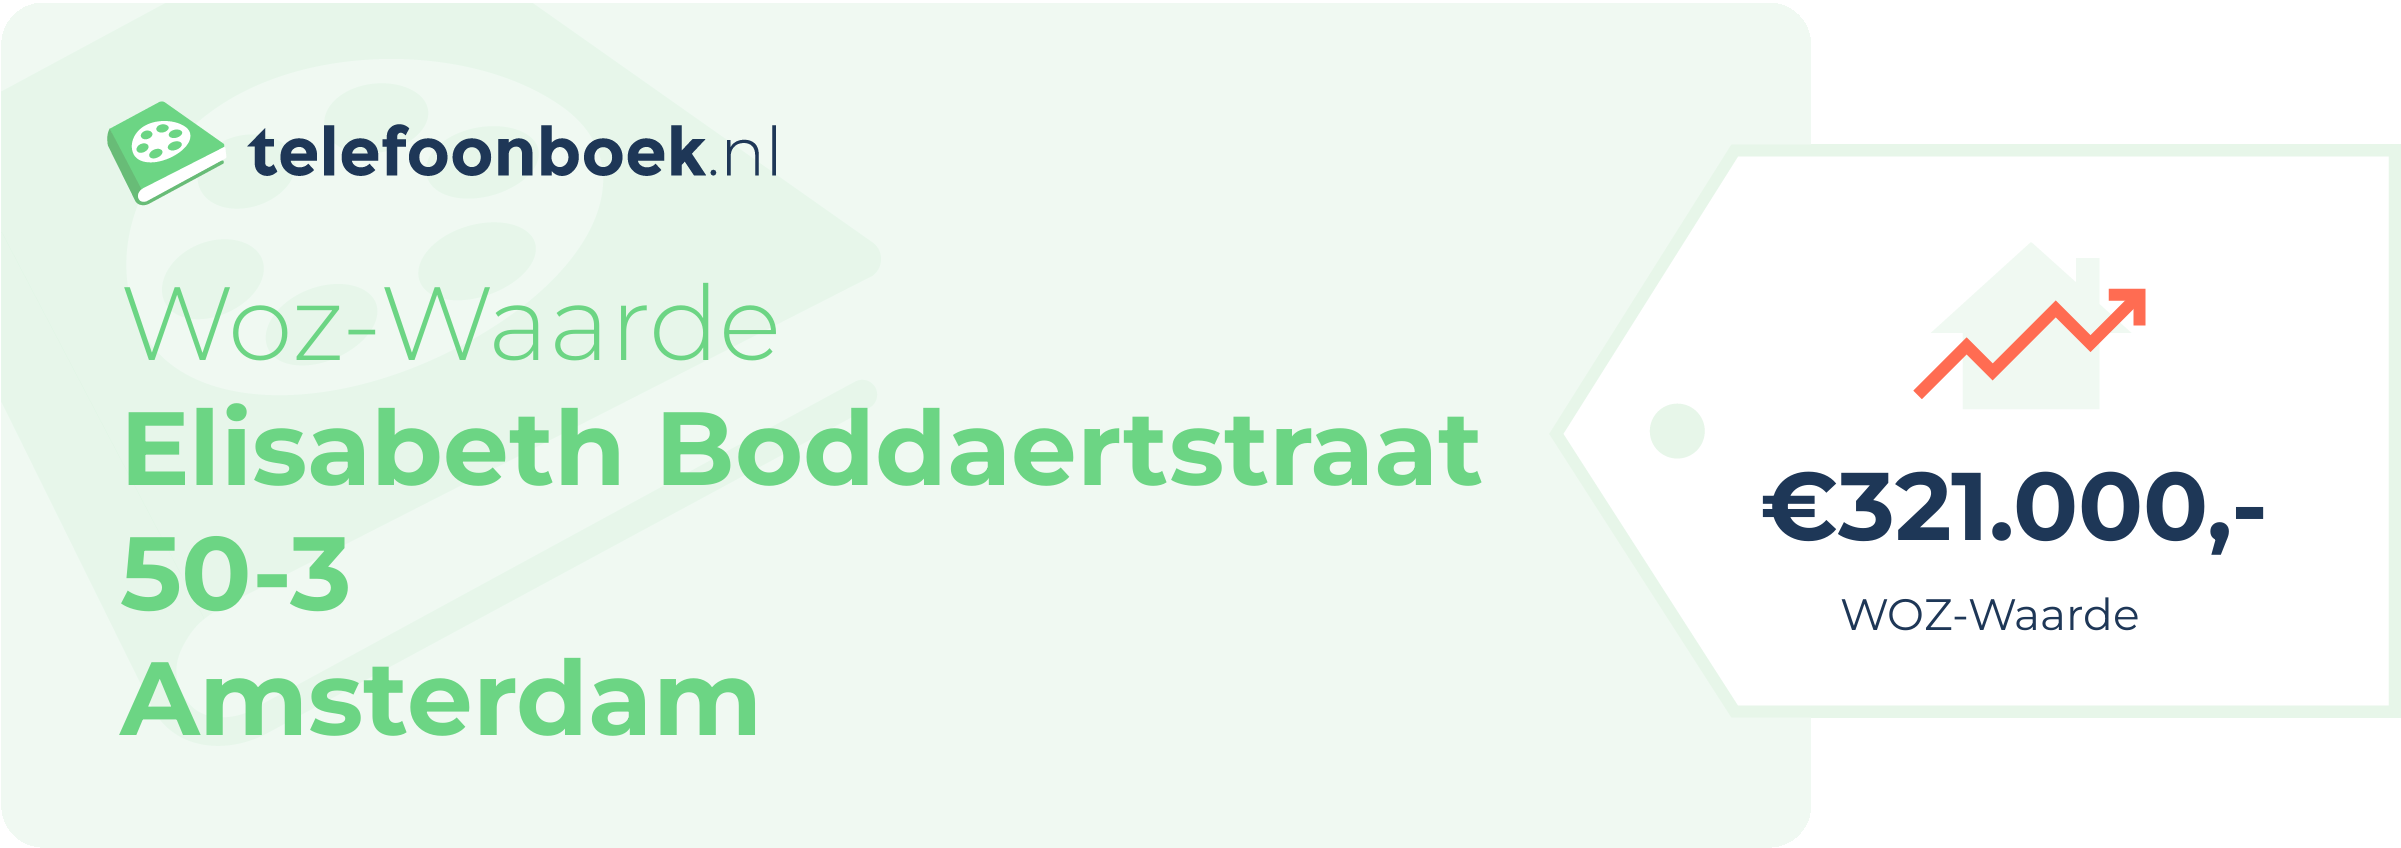 WOZ-waarde Elisabeth Boddaertstraat 50-3 Amsterdam